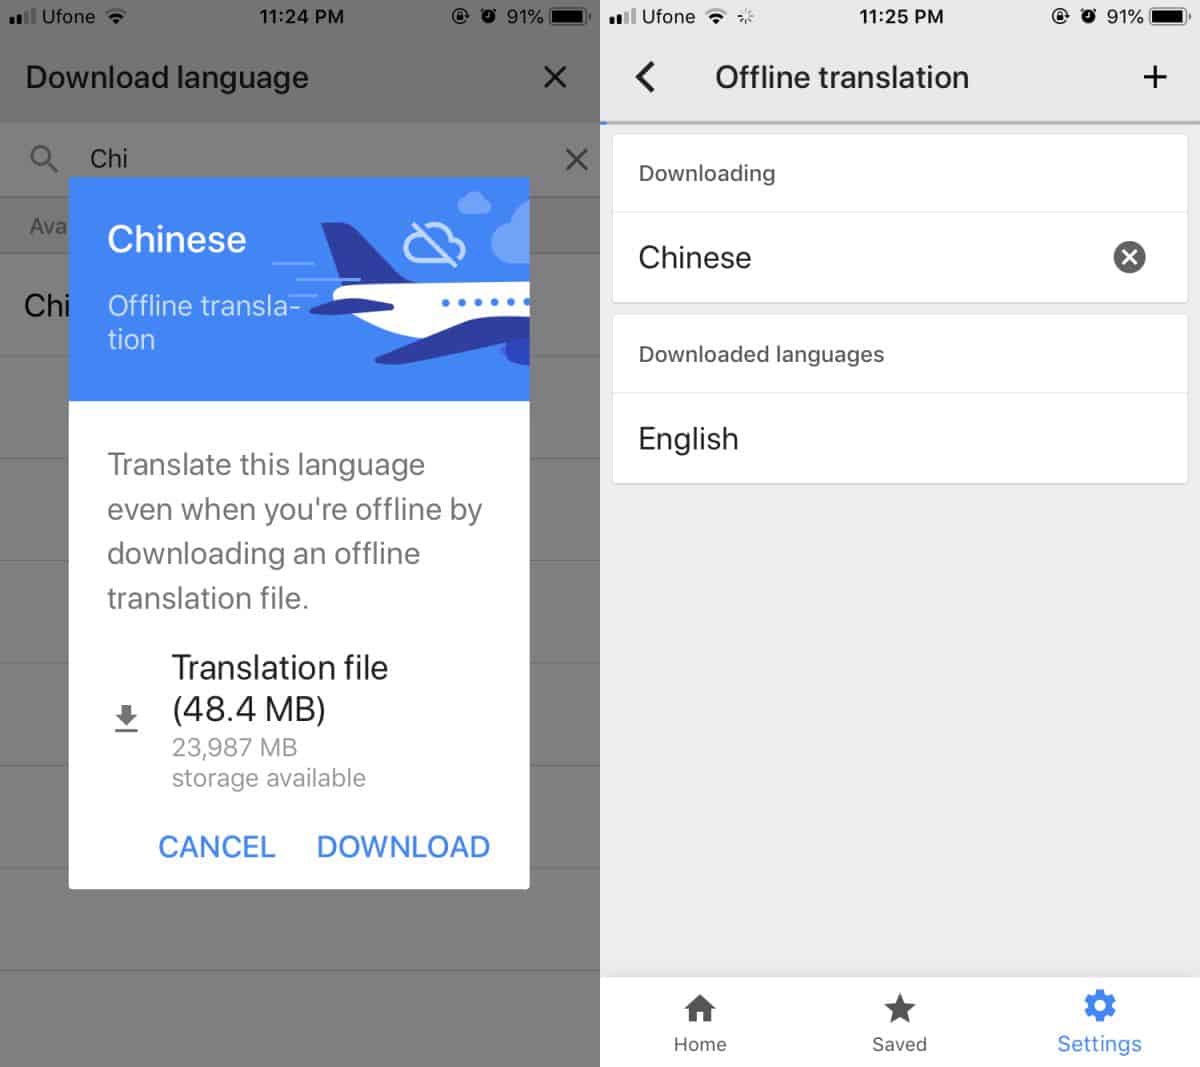 download the google translate app